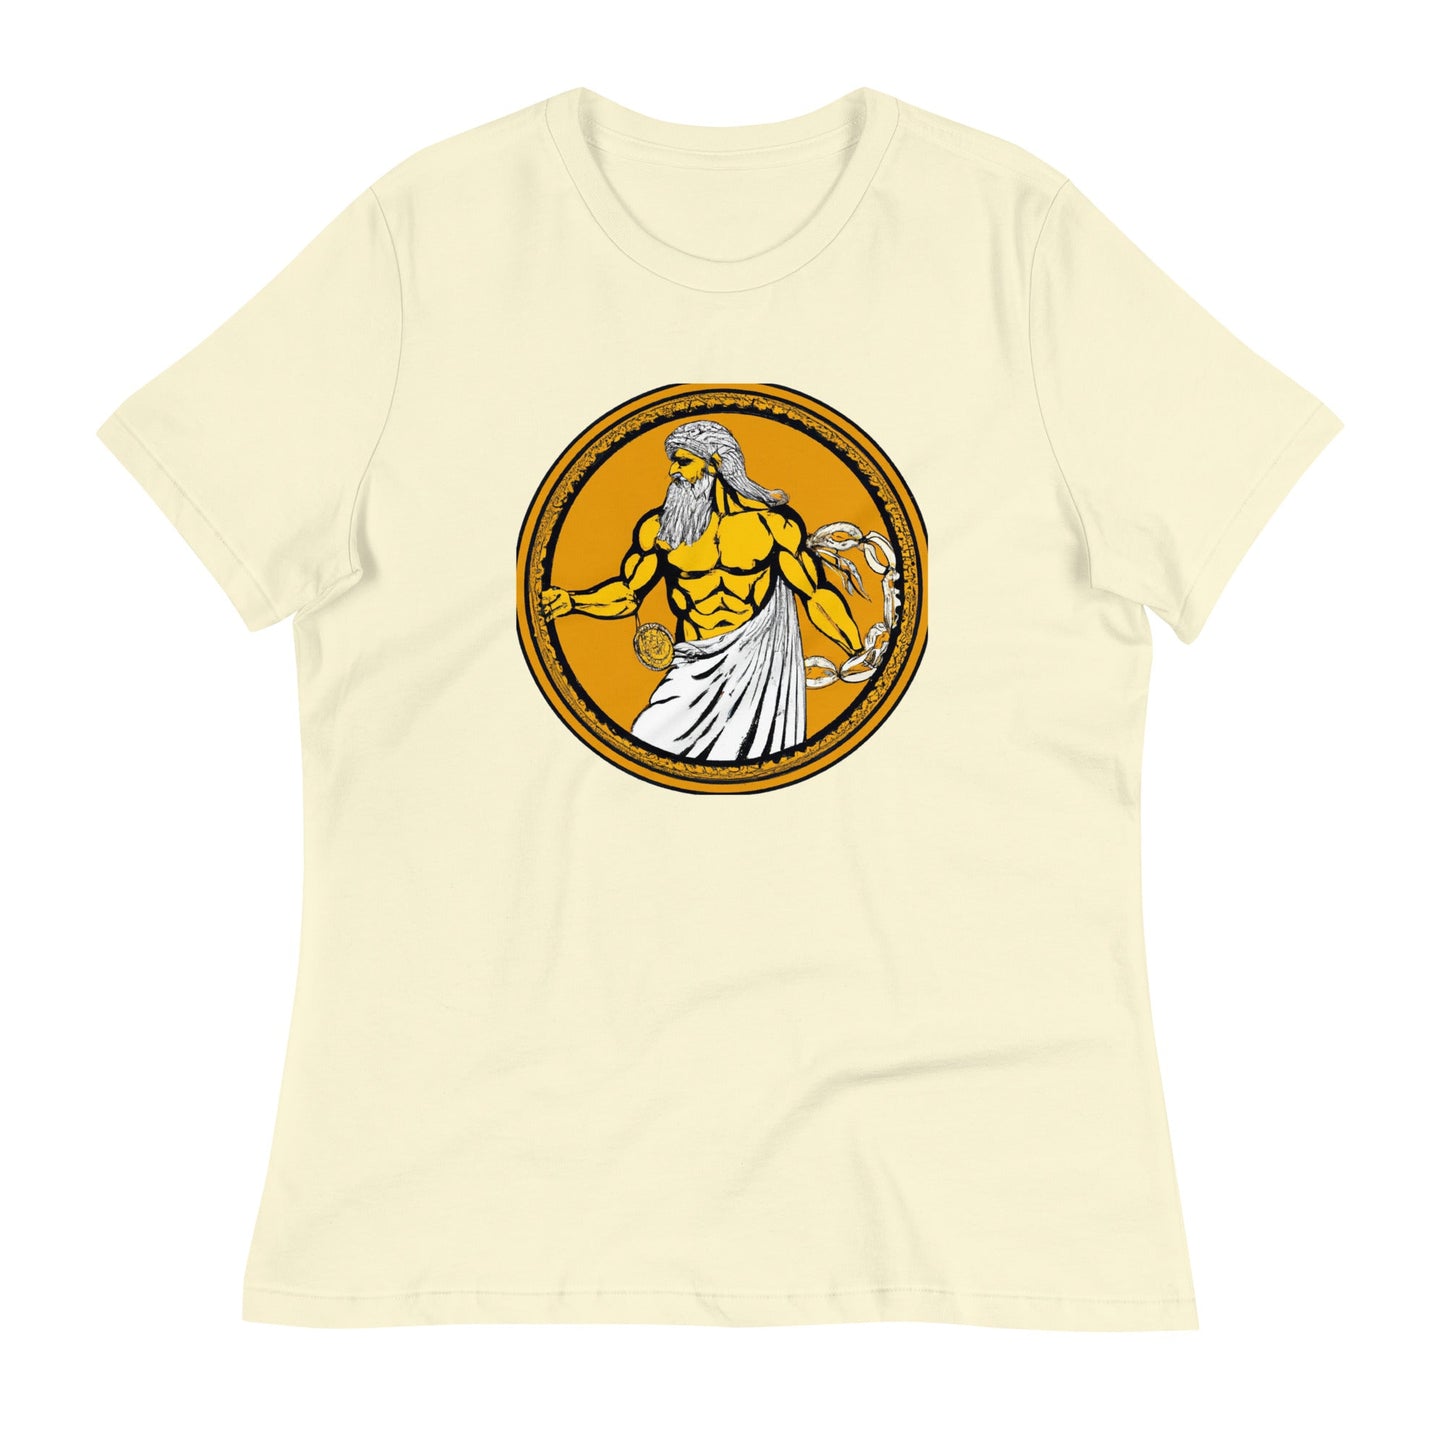 Zeus T-Shirt Women